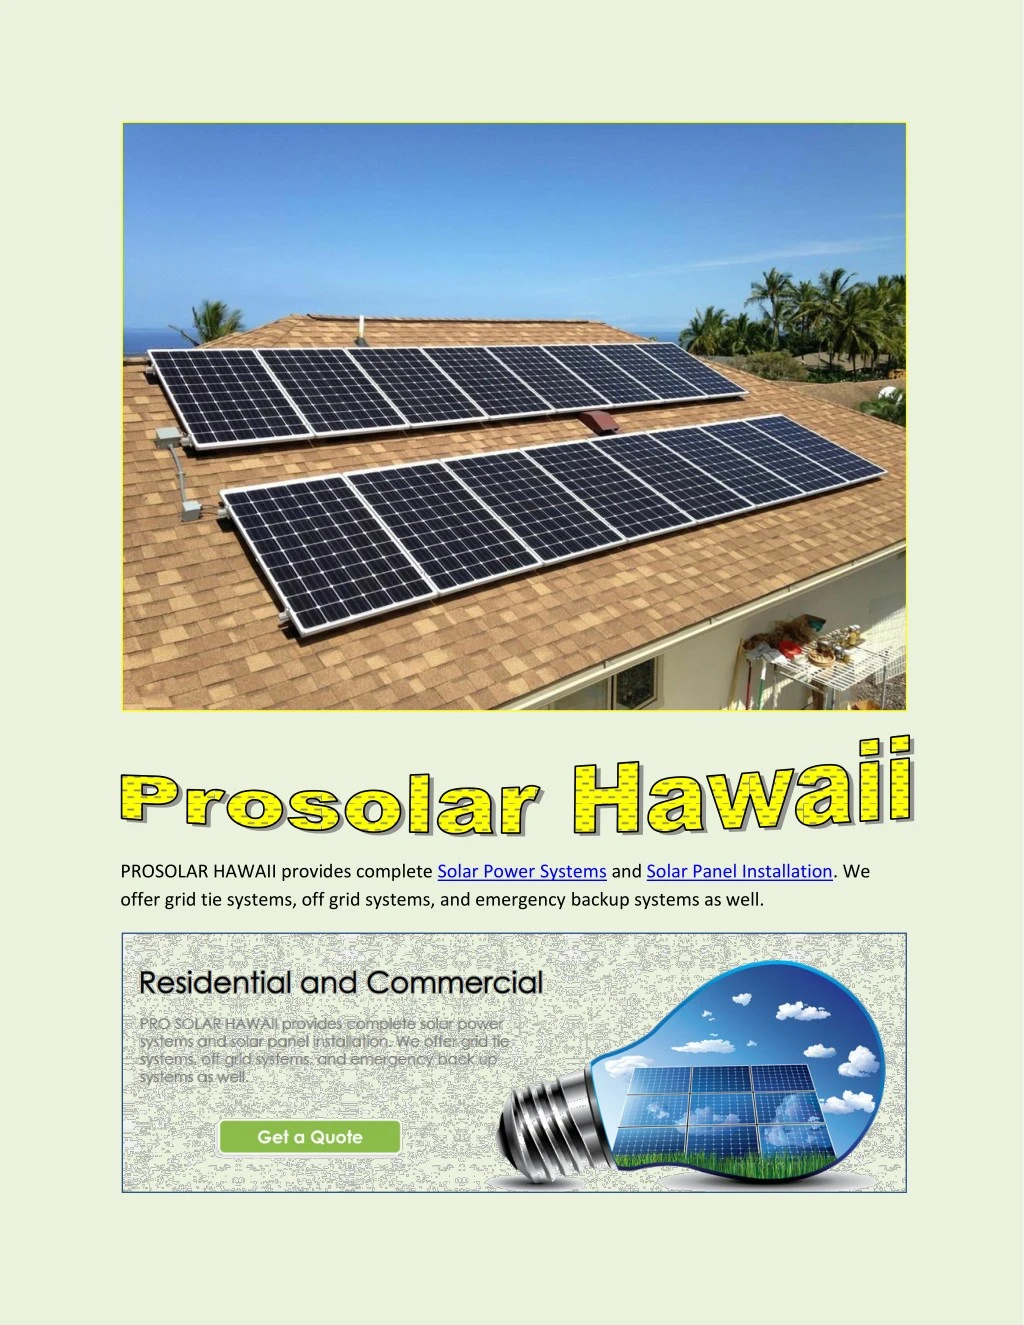 prosolar hawaii provides complete solar power